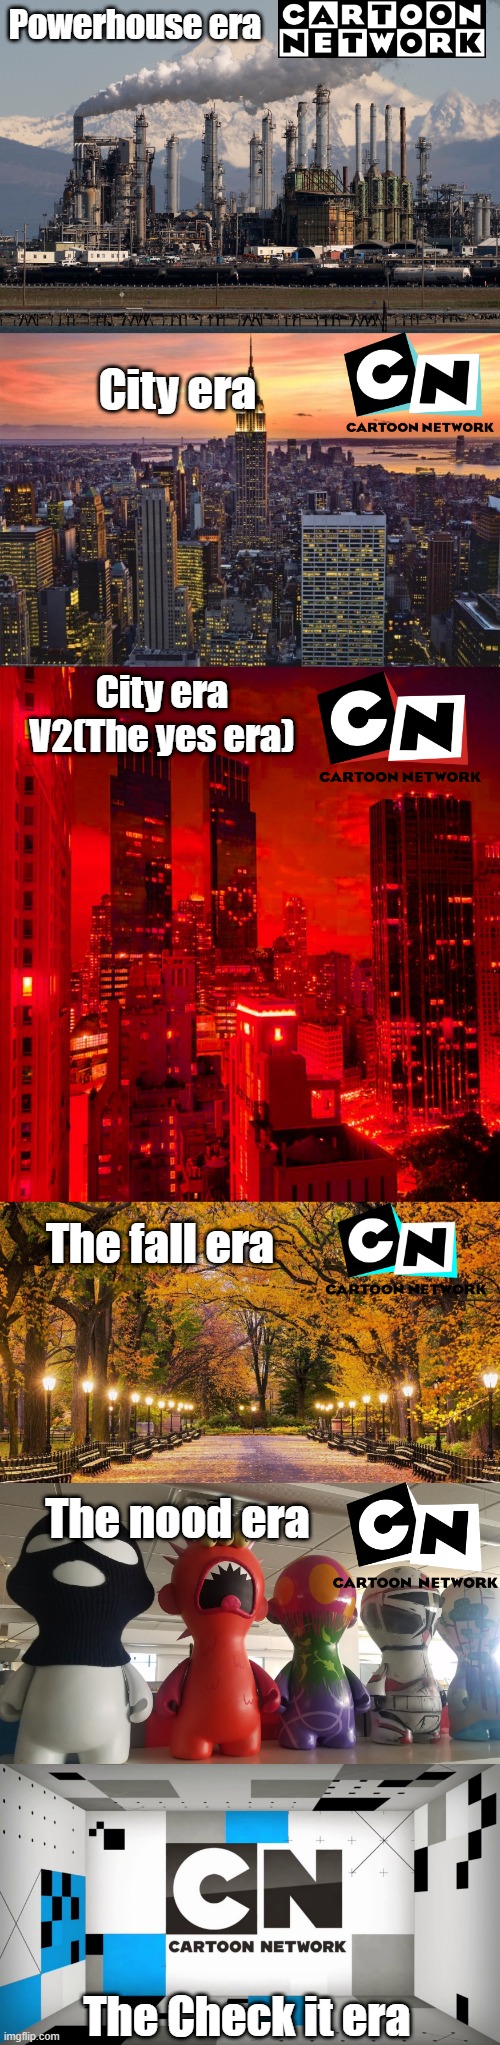 CN eras portrayed IRL | Powerhouse era; City era; City era V2(The yes era); The fall era; The nood era; The Check it era | image tagged in cartoon network,history,memories | made w/ Imgflip meme maker